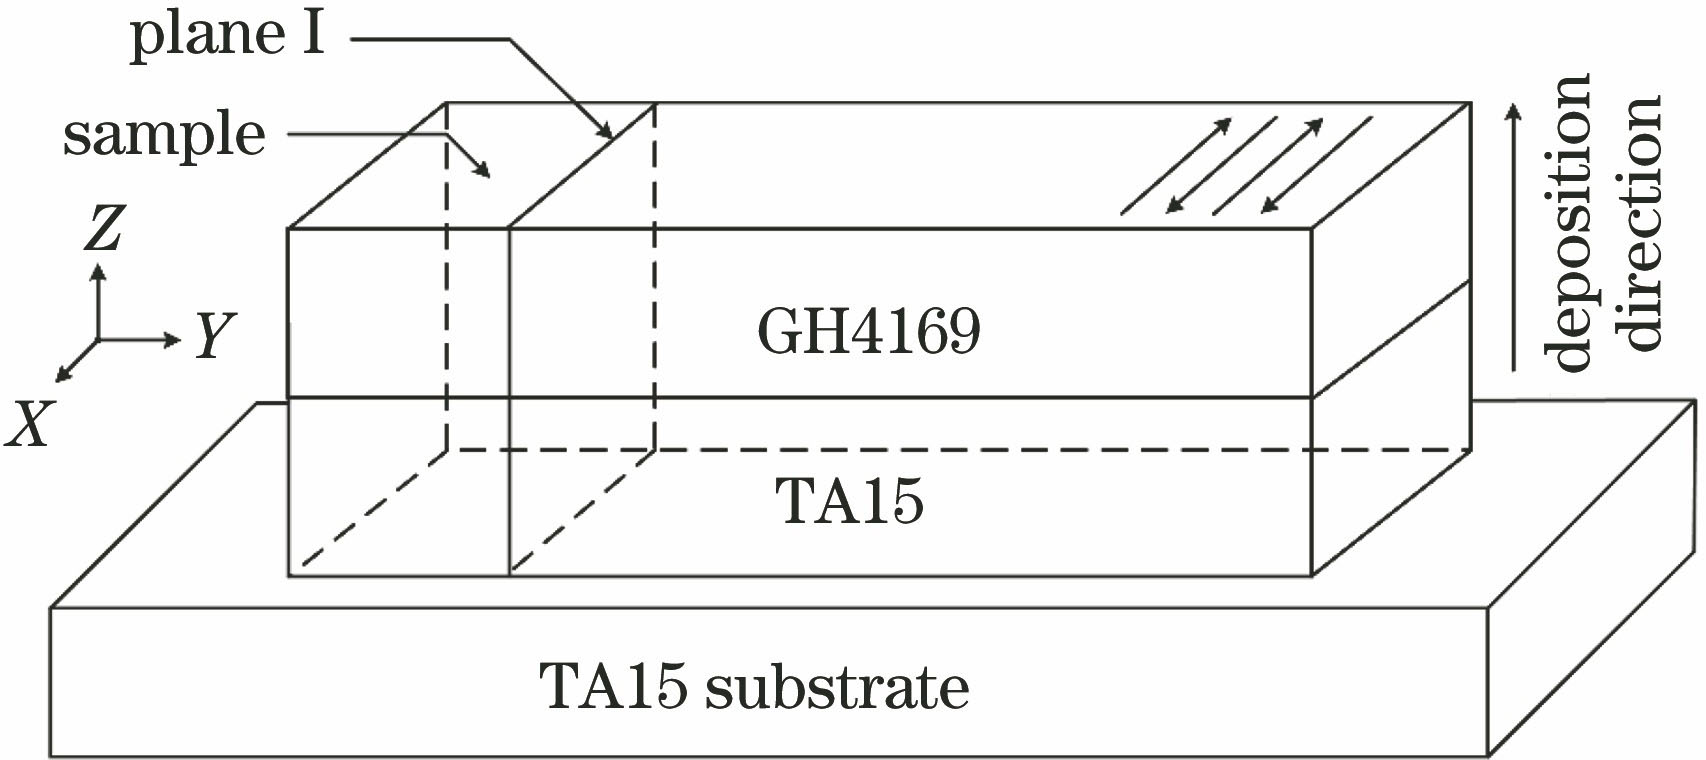 Schematic of composite structure